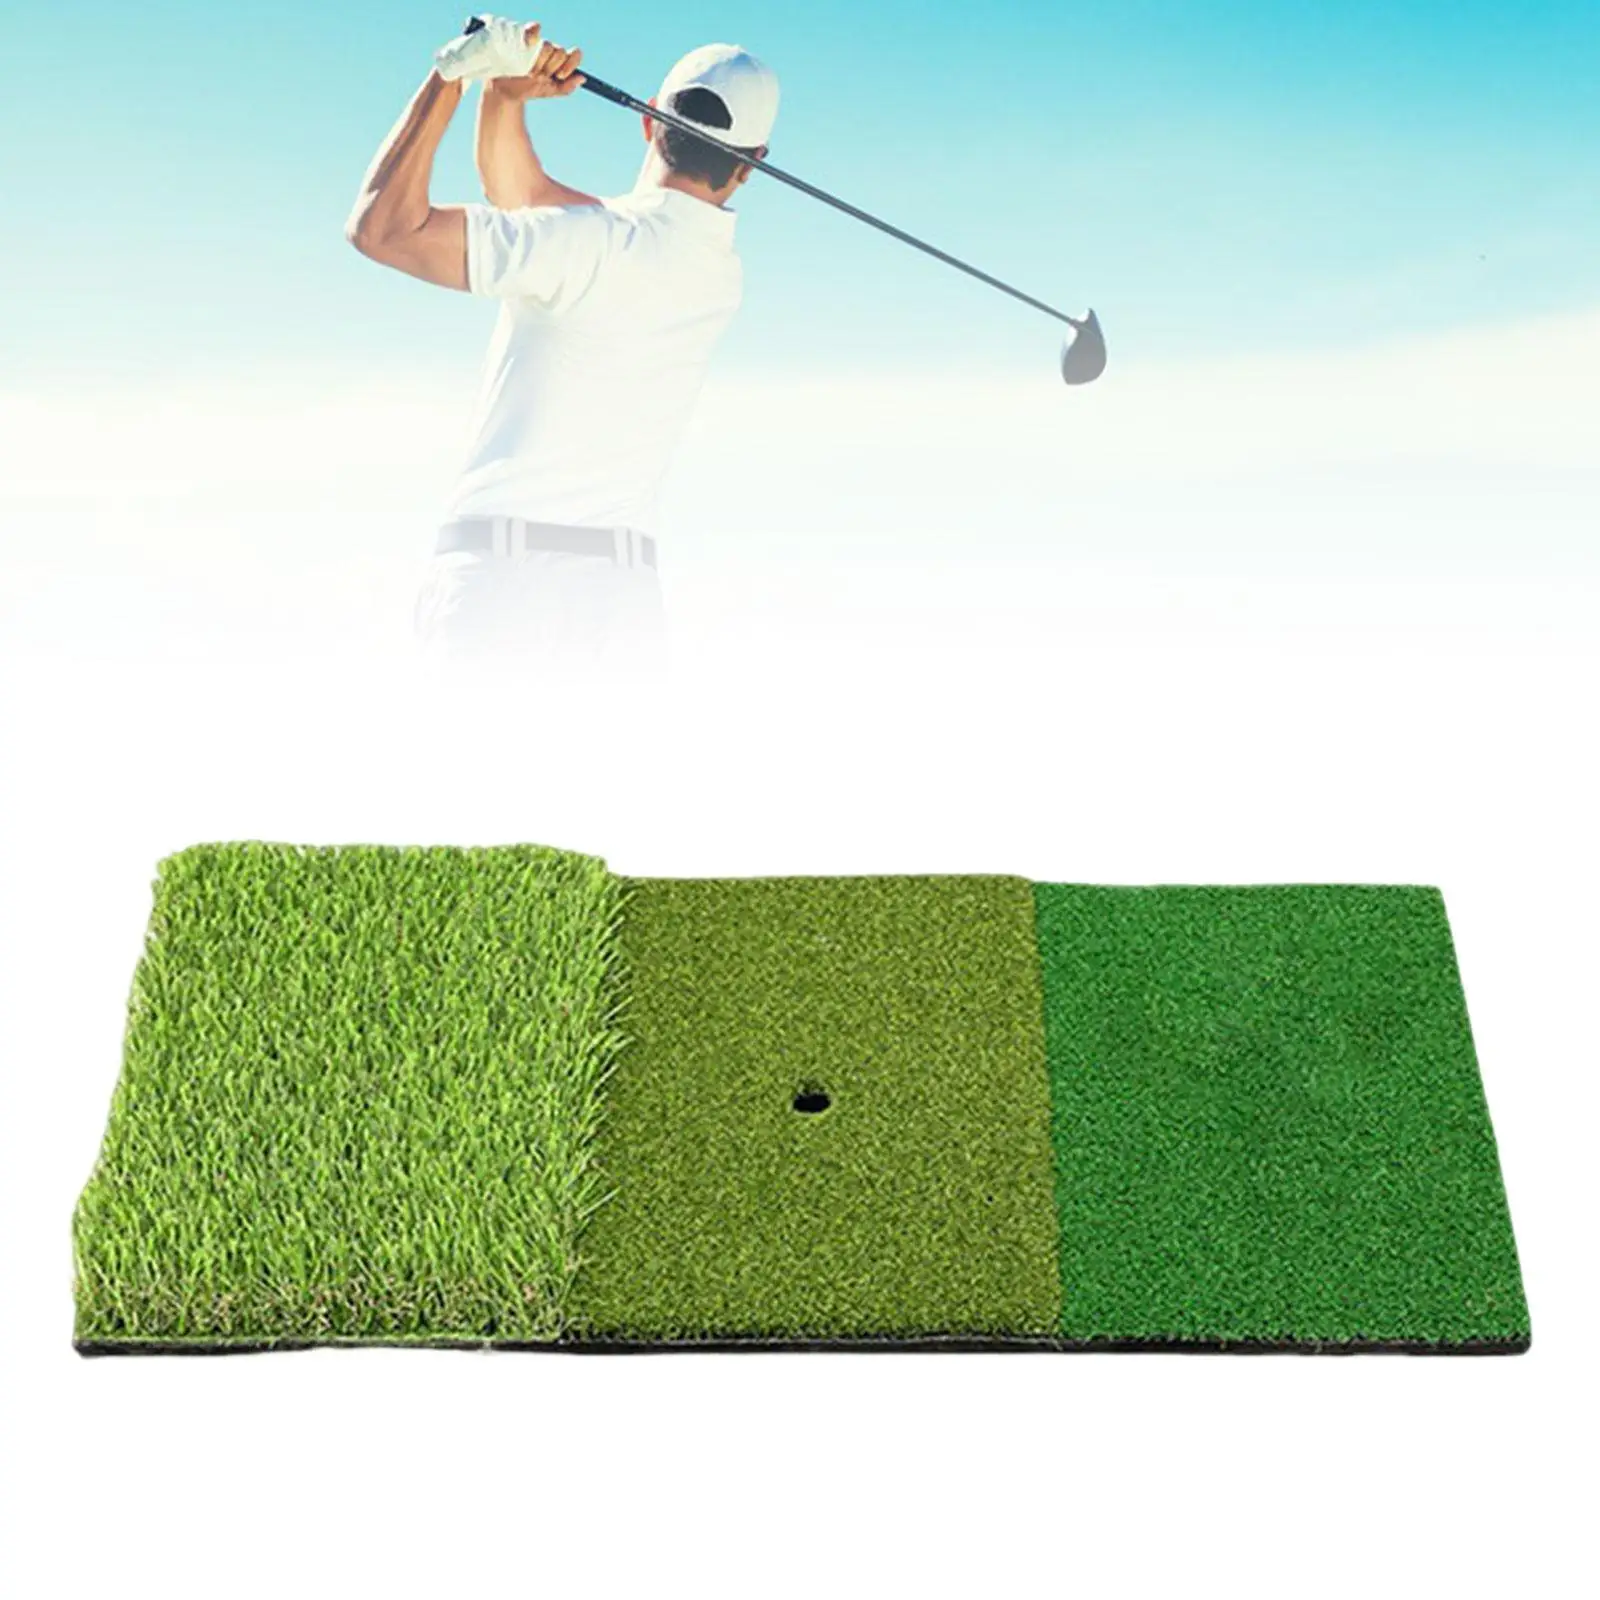 Golf Hitting Mat Grass Mat Swing Trainer for Outdoor Indoor Equipment Gifts